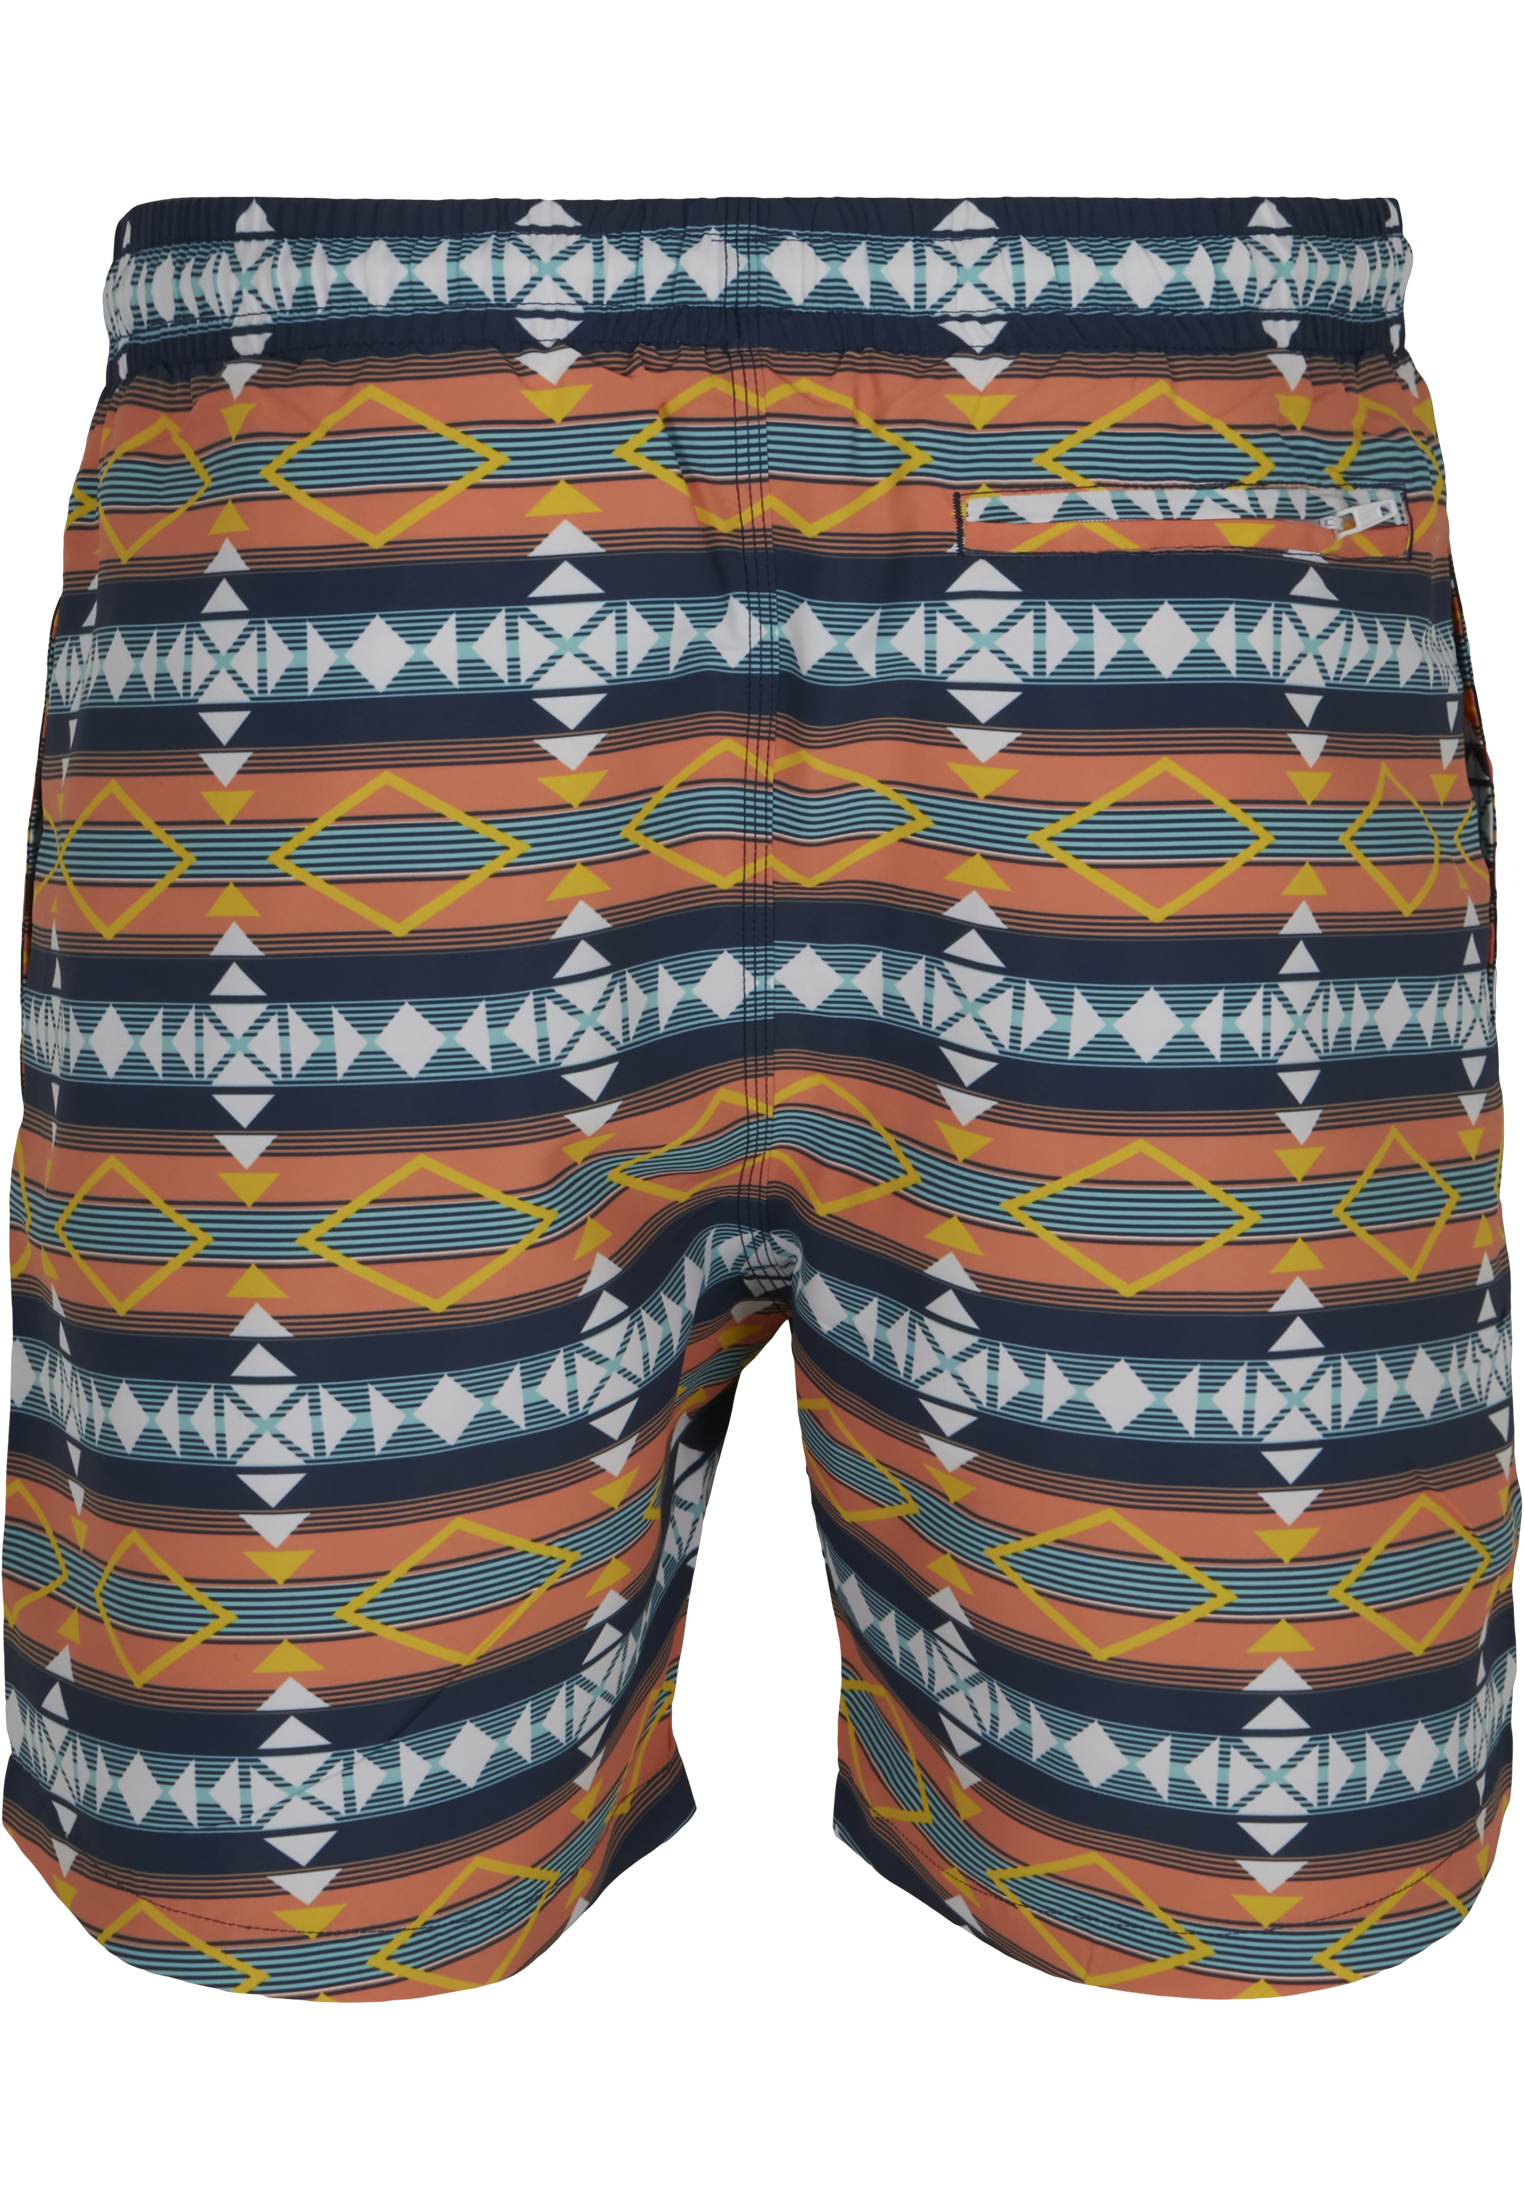 Bademode Inka Swim Shorts in Farbe white